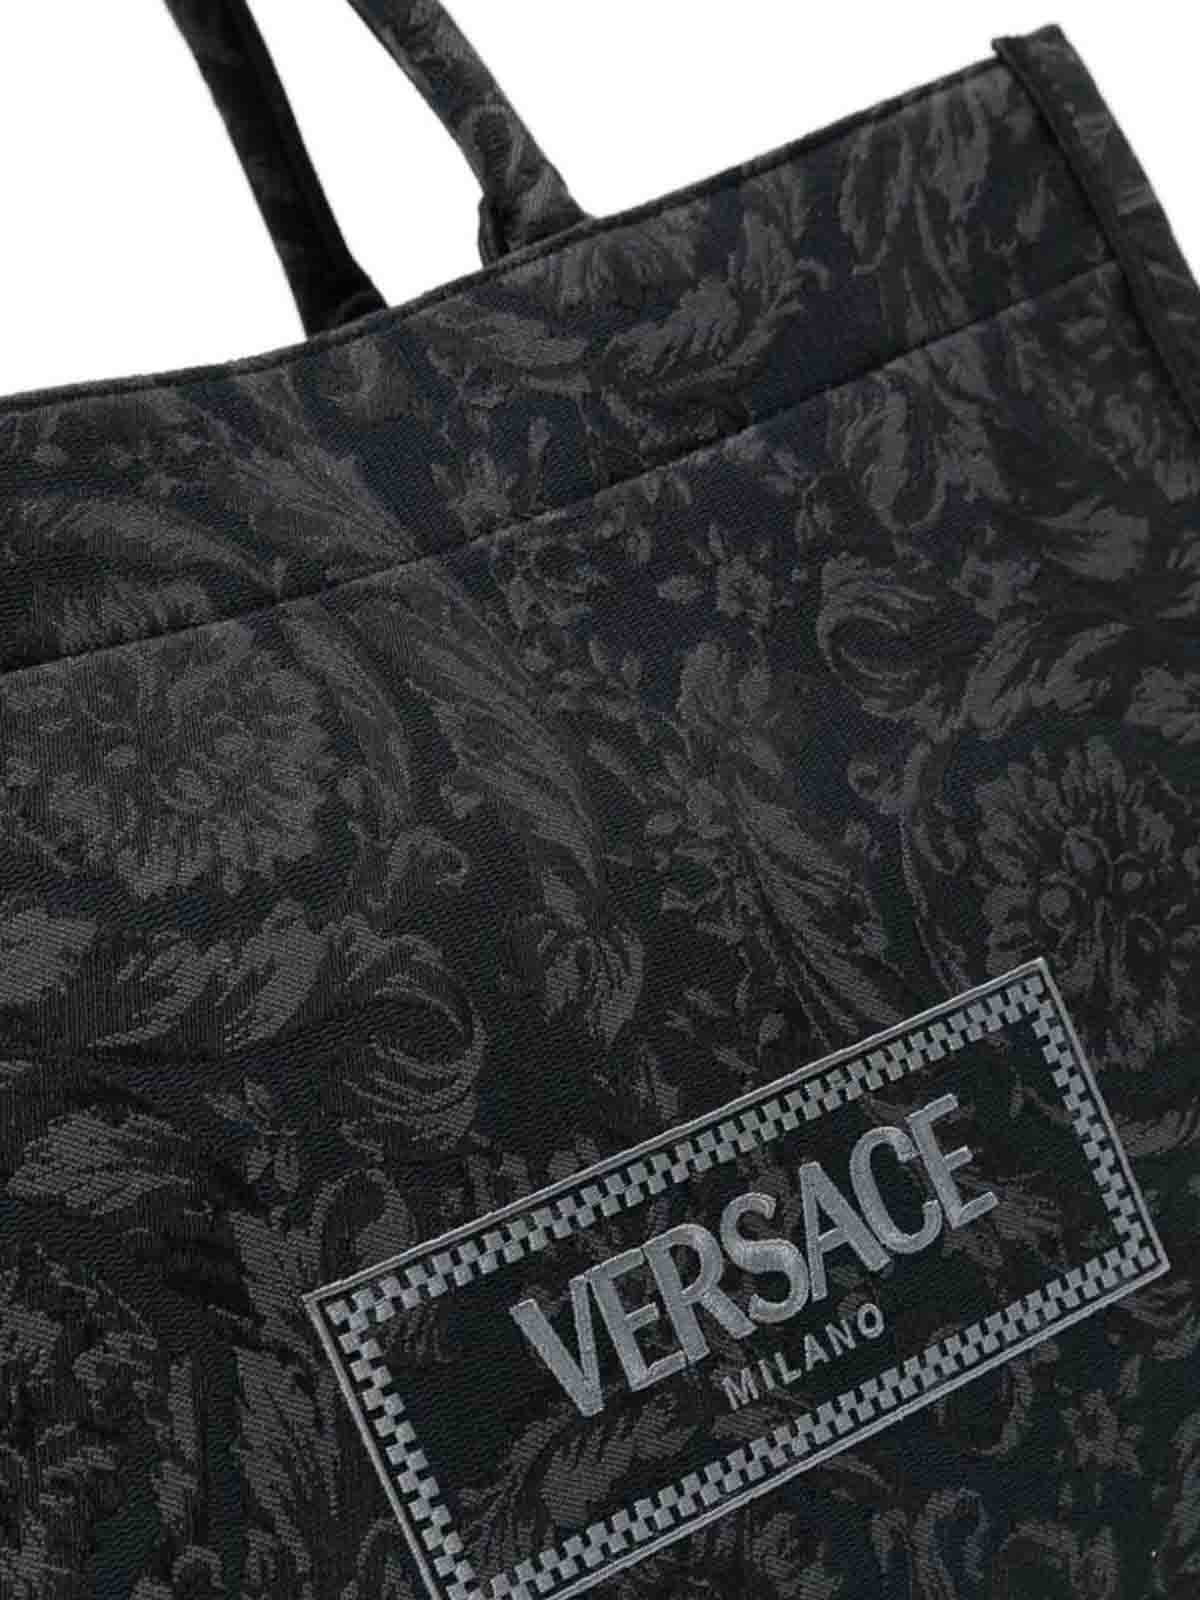 Shop Versace Large Barocco Athena Tote Bag In Black